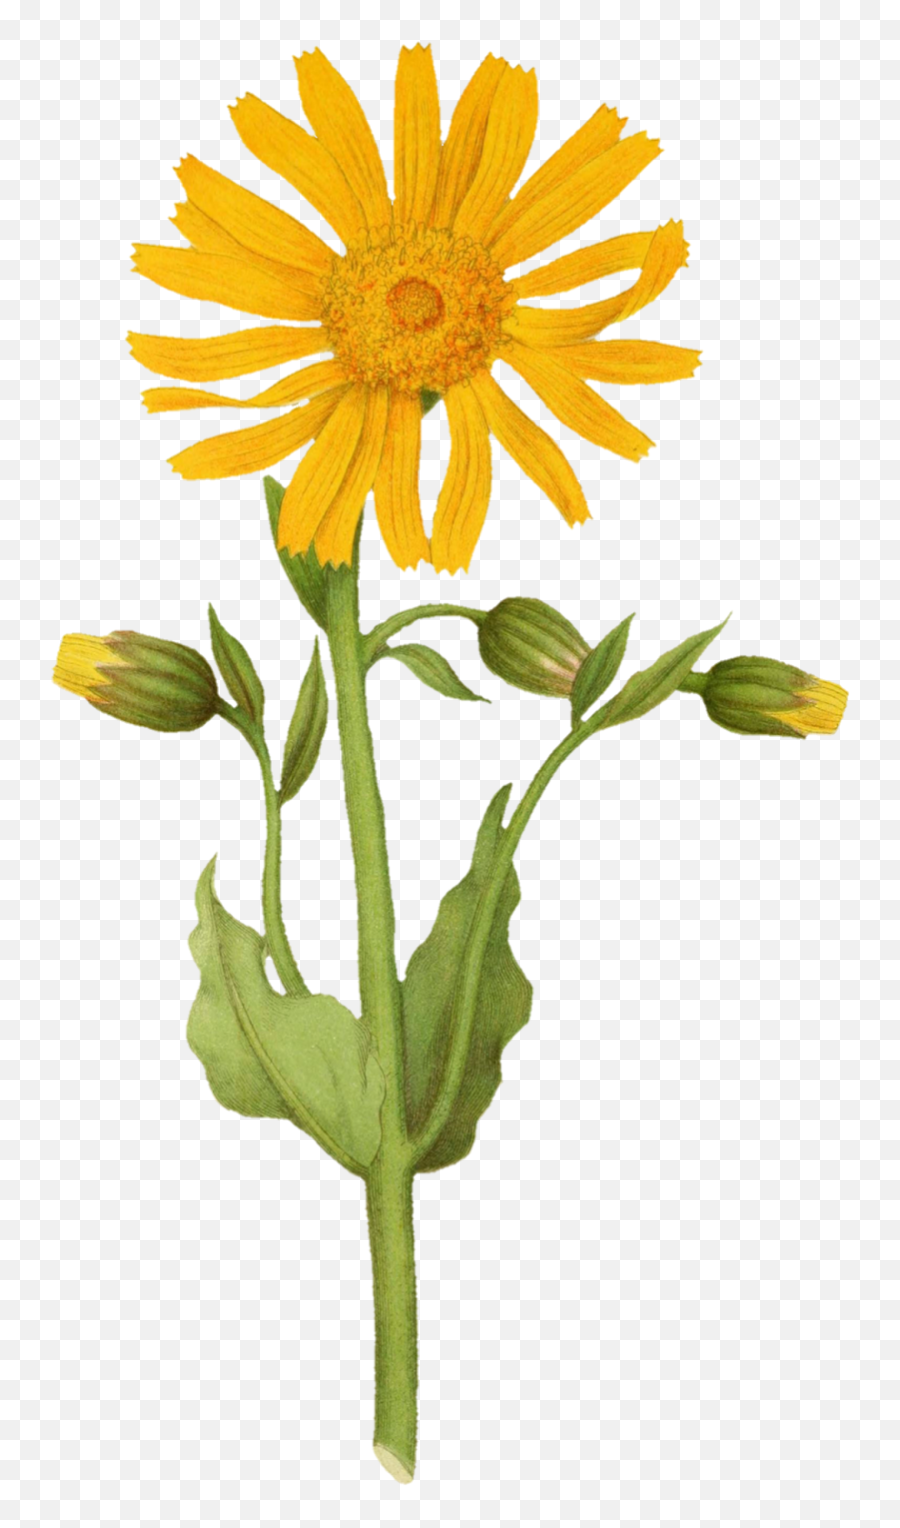 Sunflower Painted Art Clipart Free Stock Photo - Public Arnica Montana Emoji,Sunflowers Clipart